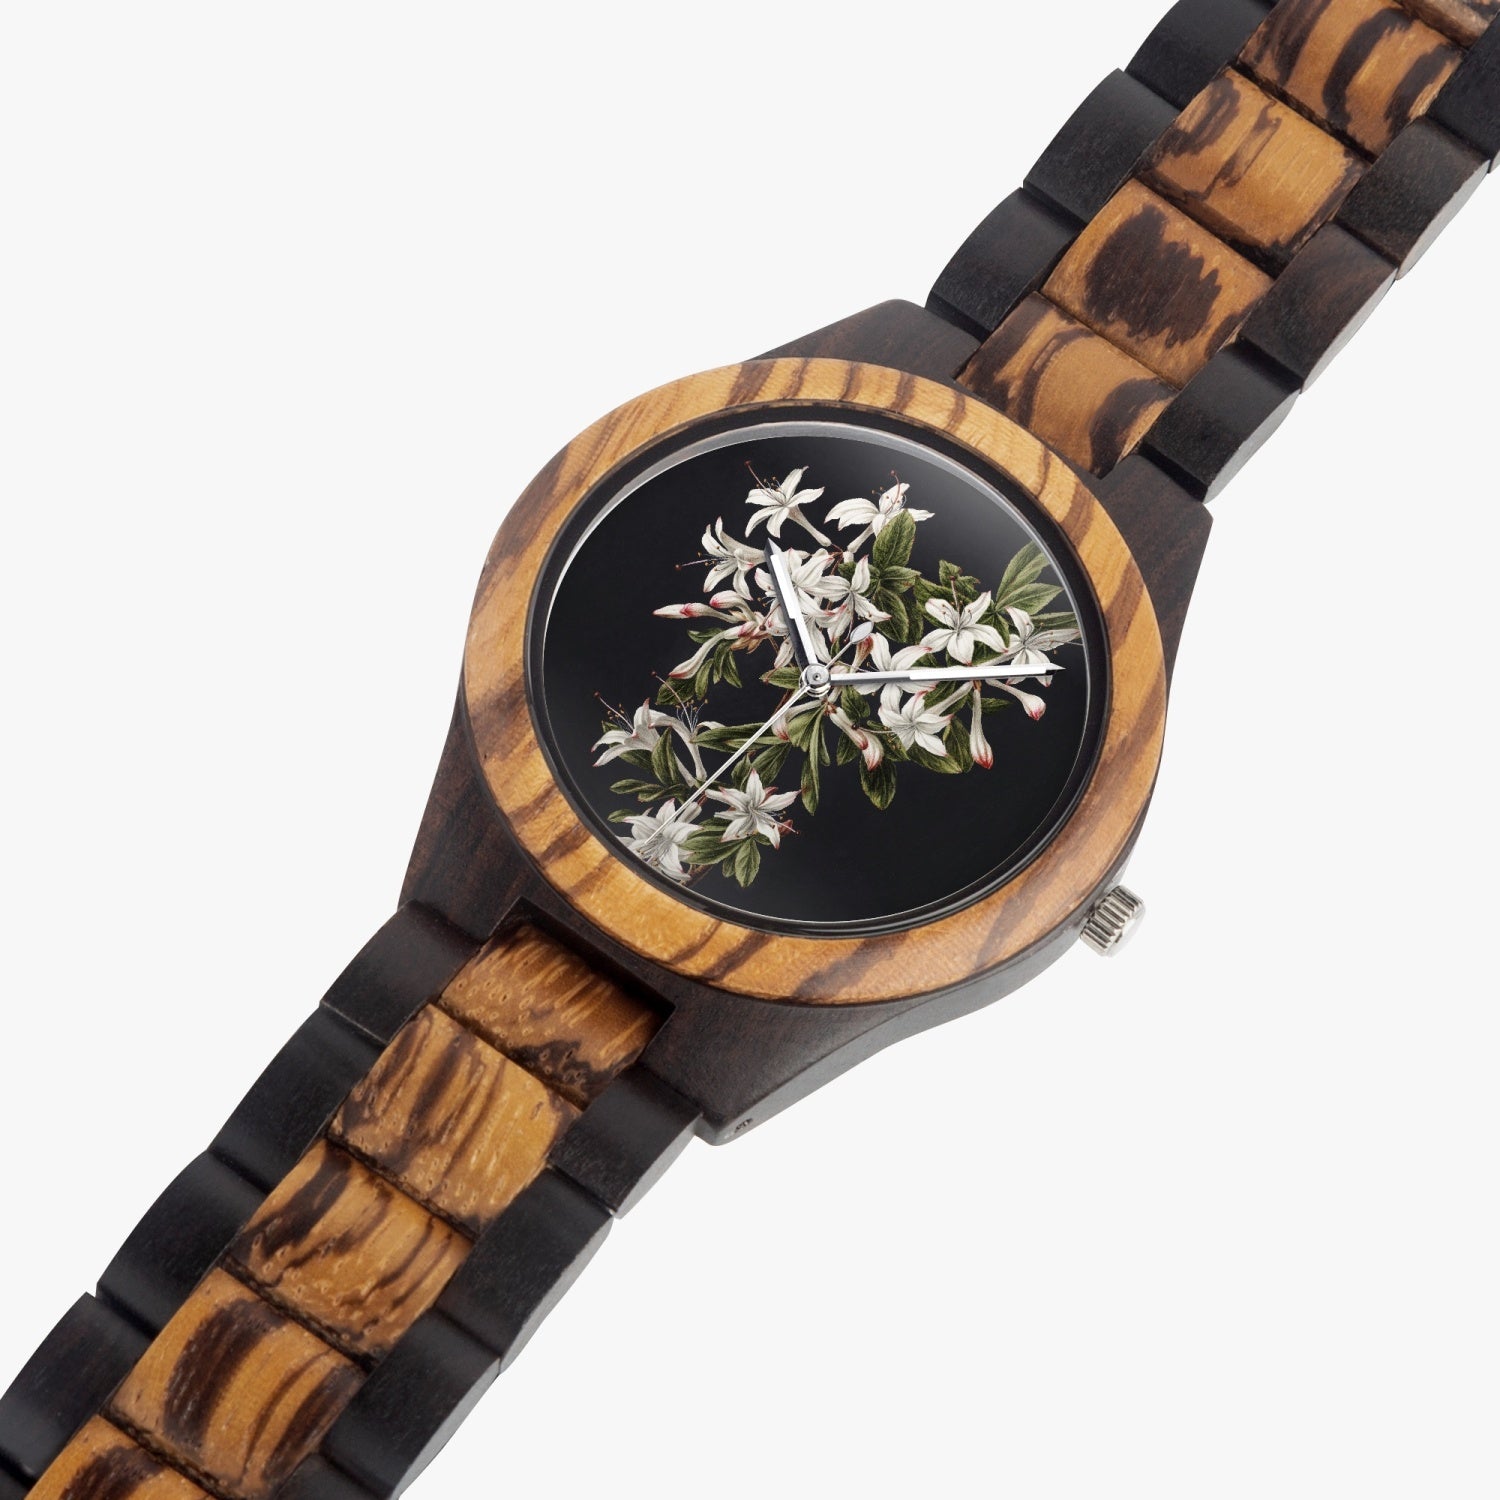 White flowers in an Ebony Wooden Watch, by Sensus Studio Design